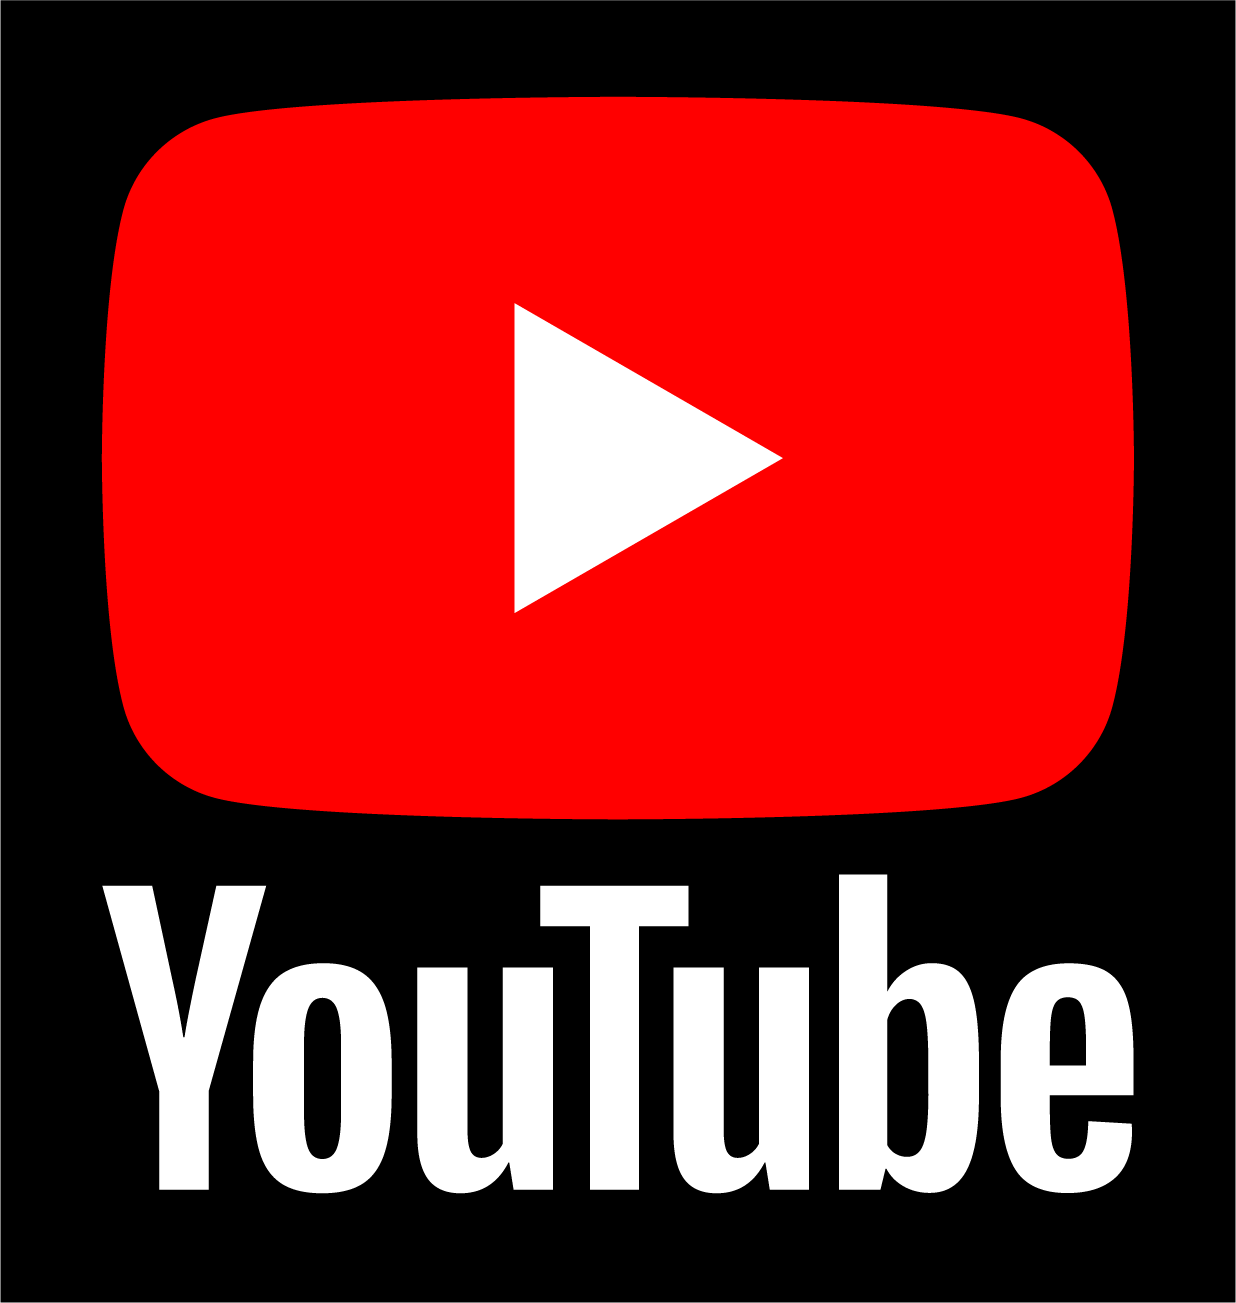 youtube logo download